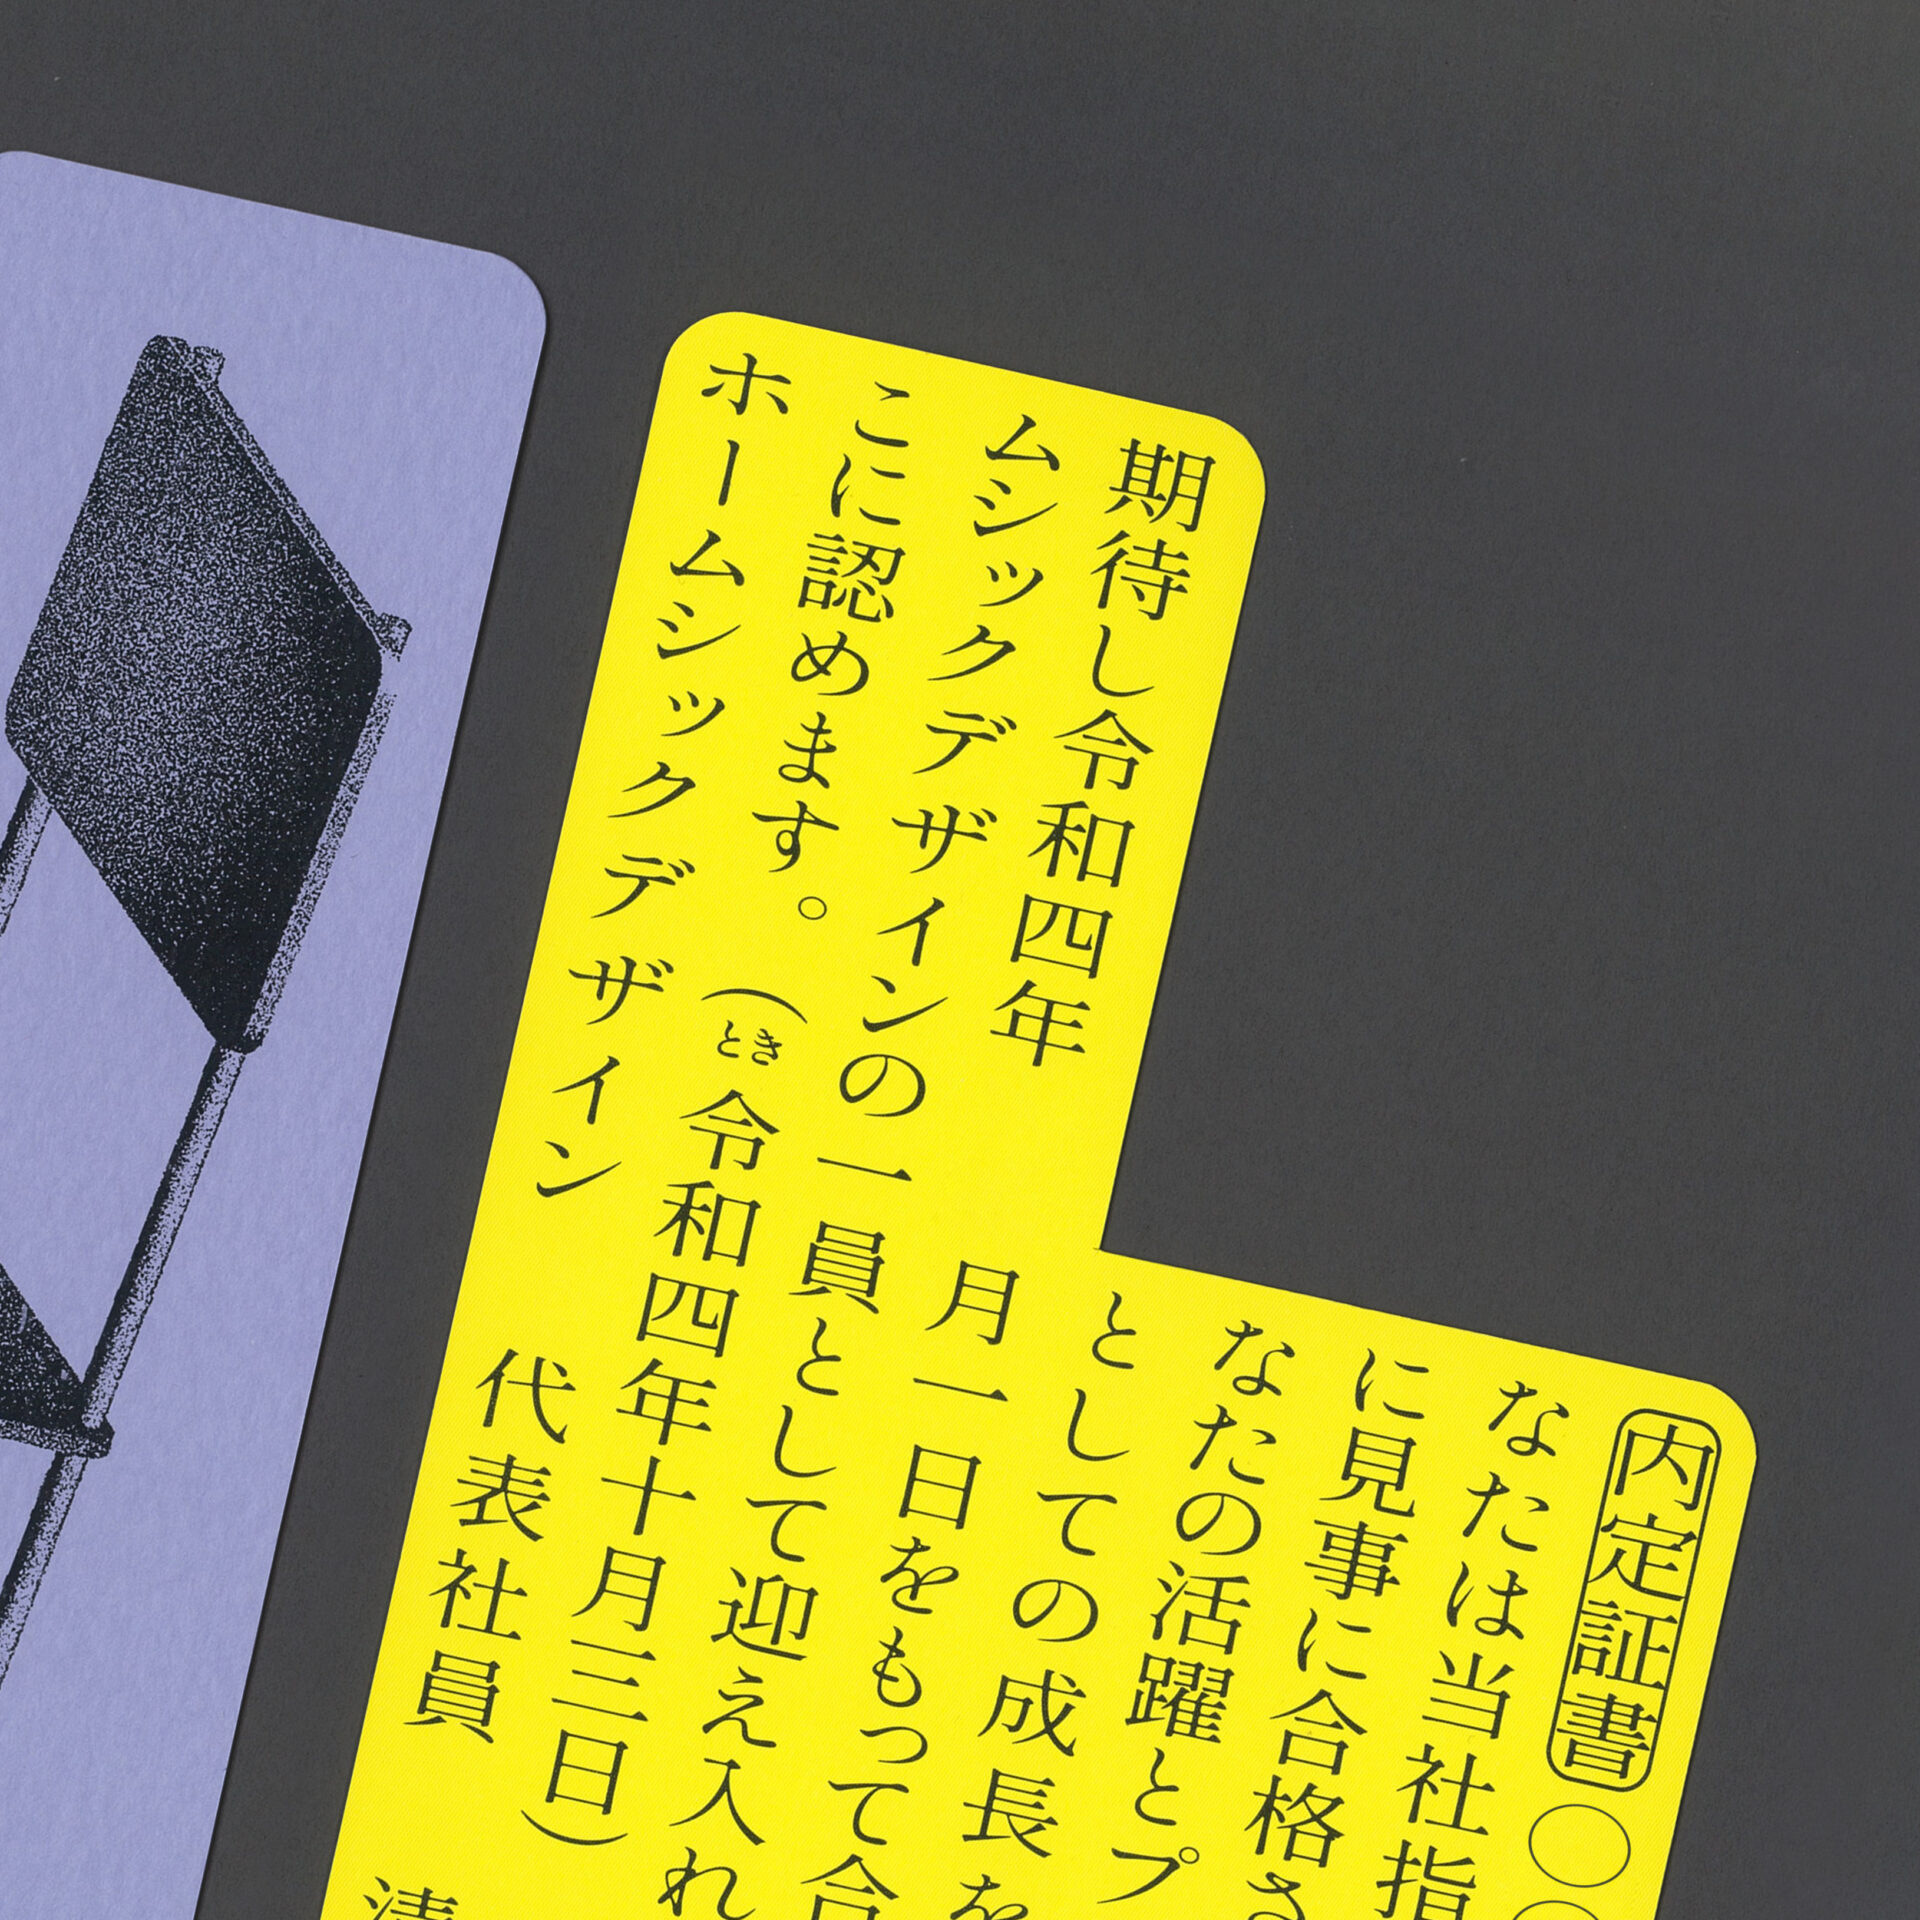 Dirtybarn Interviews Kenichi Kuromaru: Distinctive Approach with Shape, Detail and Typography 14